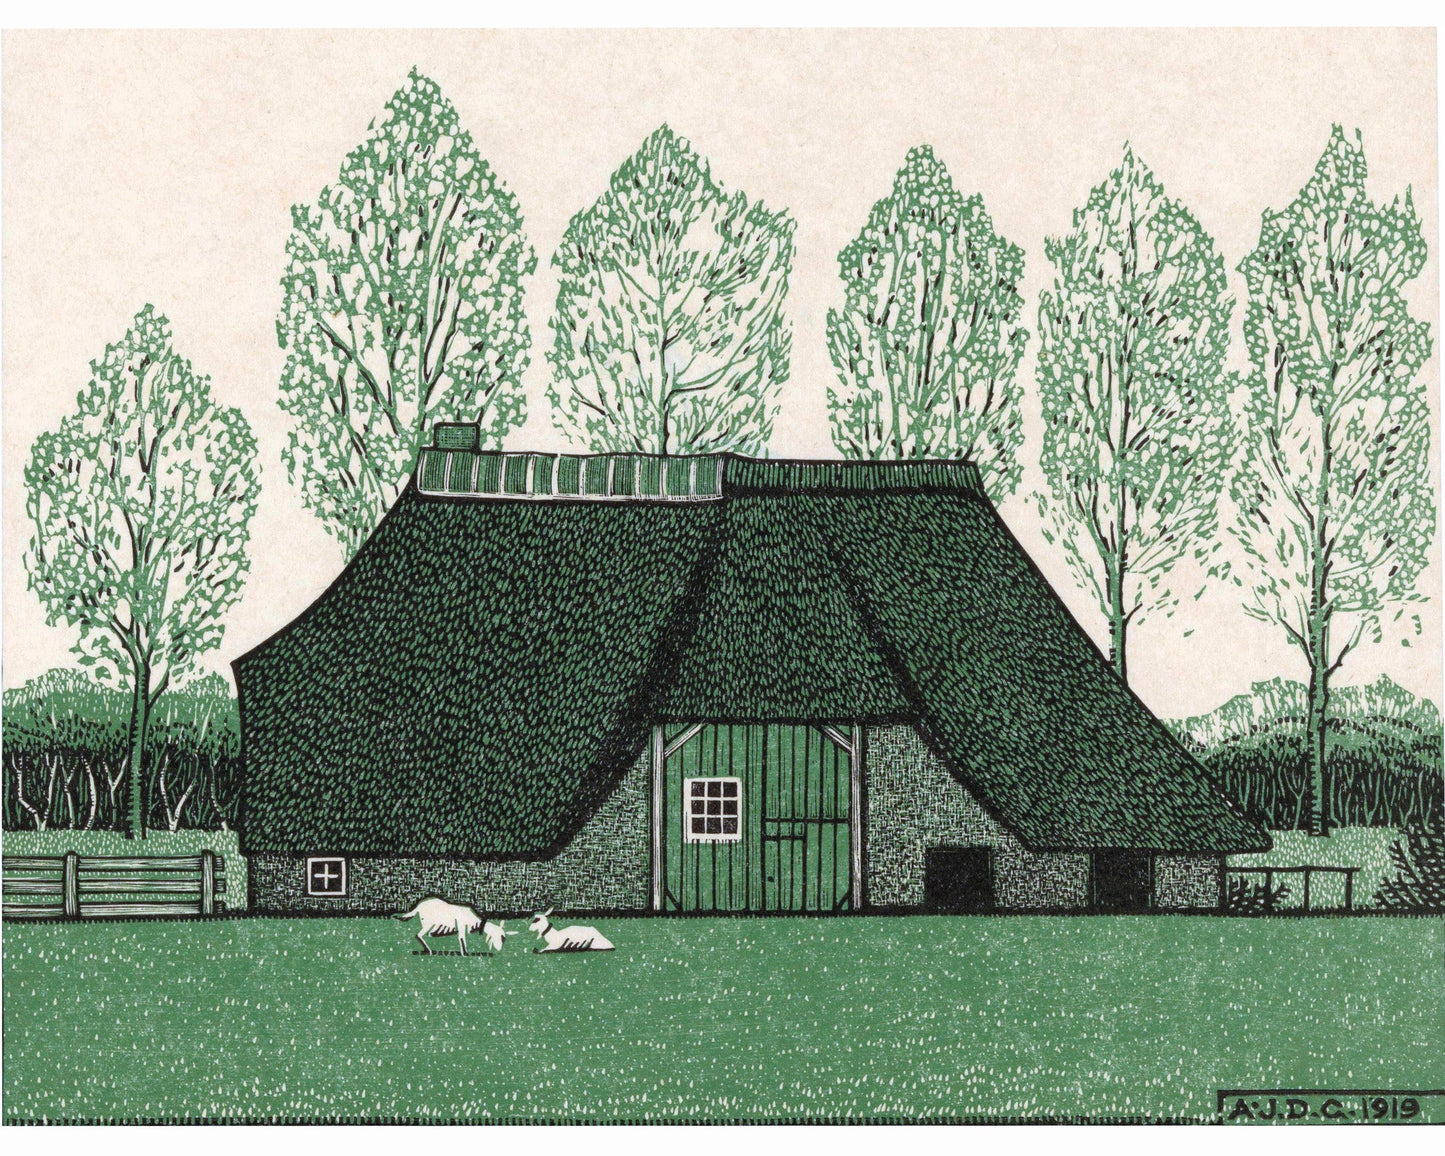 Vintage farm fine art print | Farm with thatched roof | Landscape art |  Modern vintage décor | Julie de Graag | Ready to frame & gift